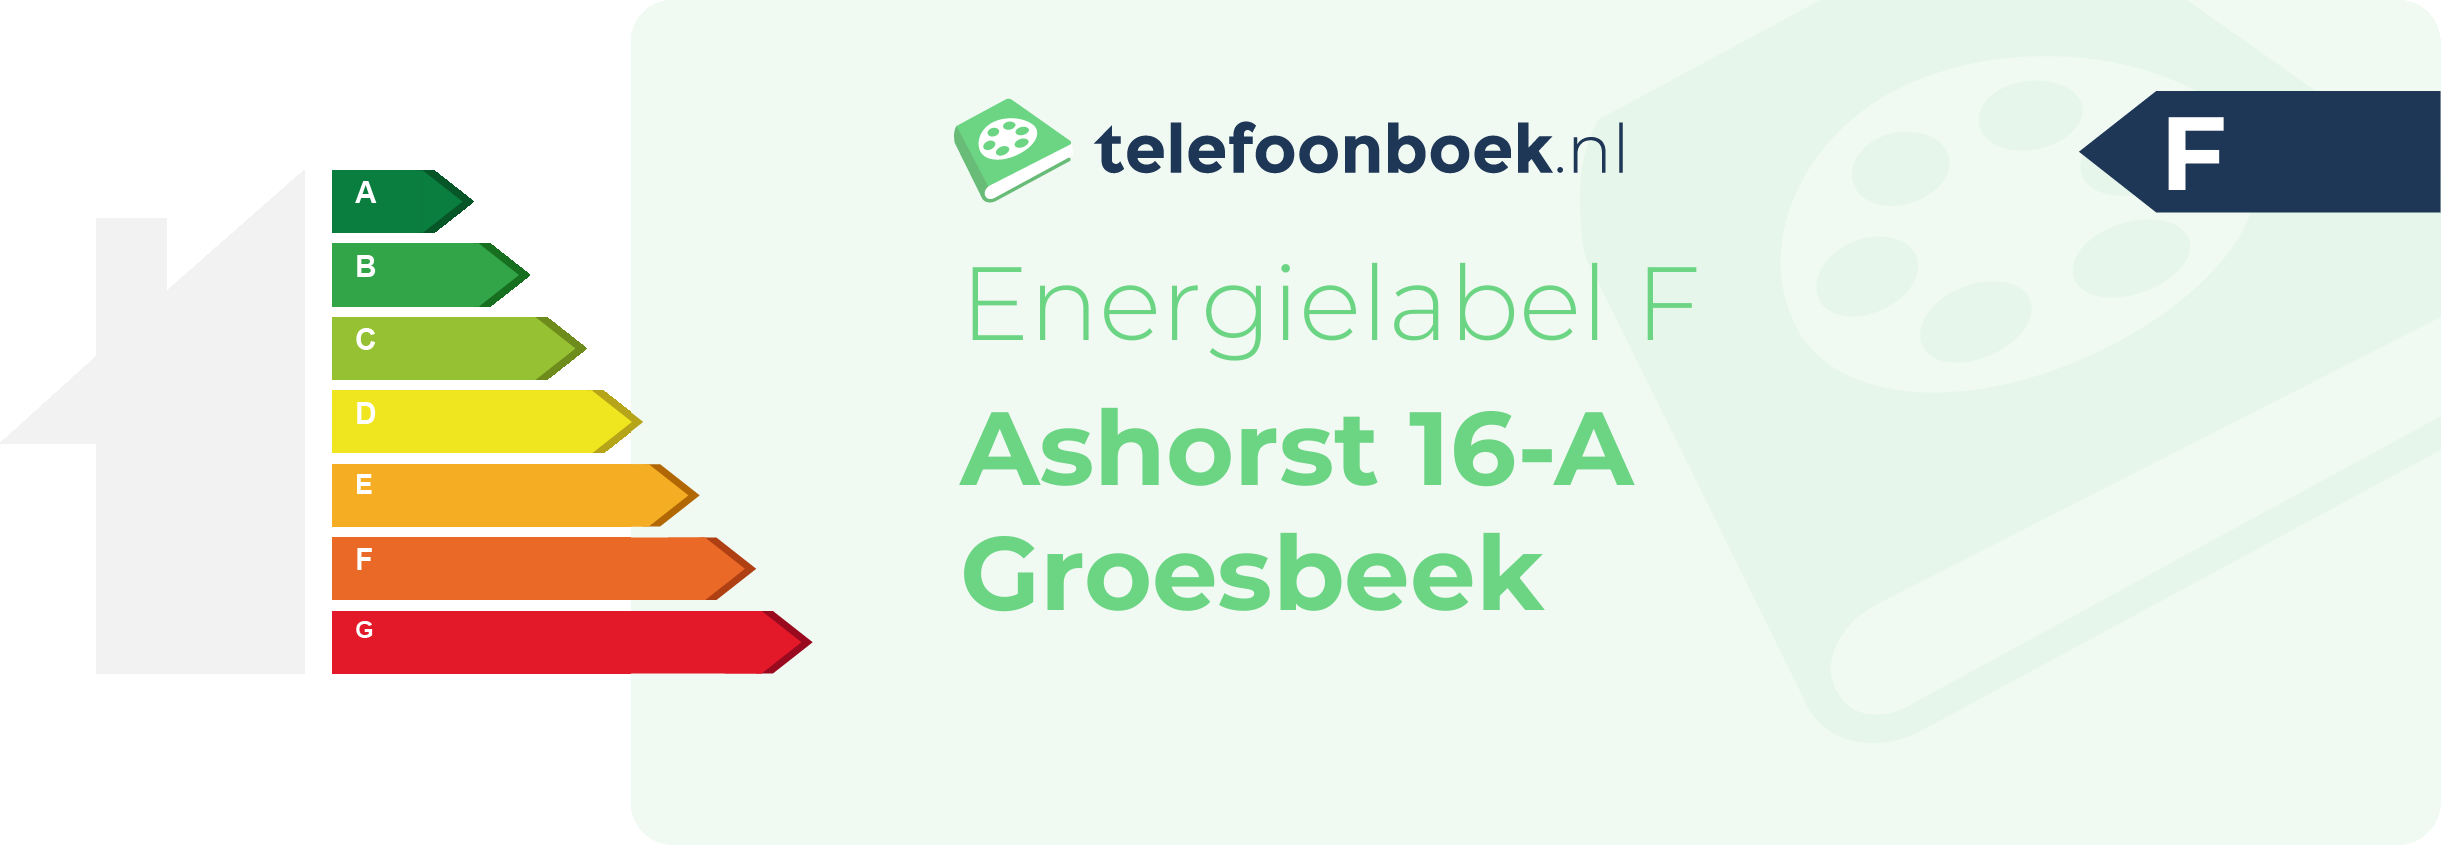 Energielabel Ashorst 16-A Groesbeek